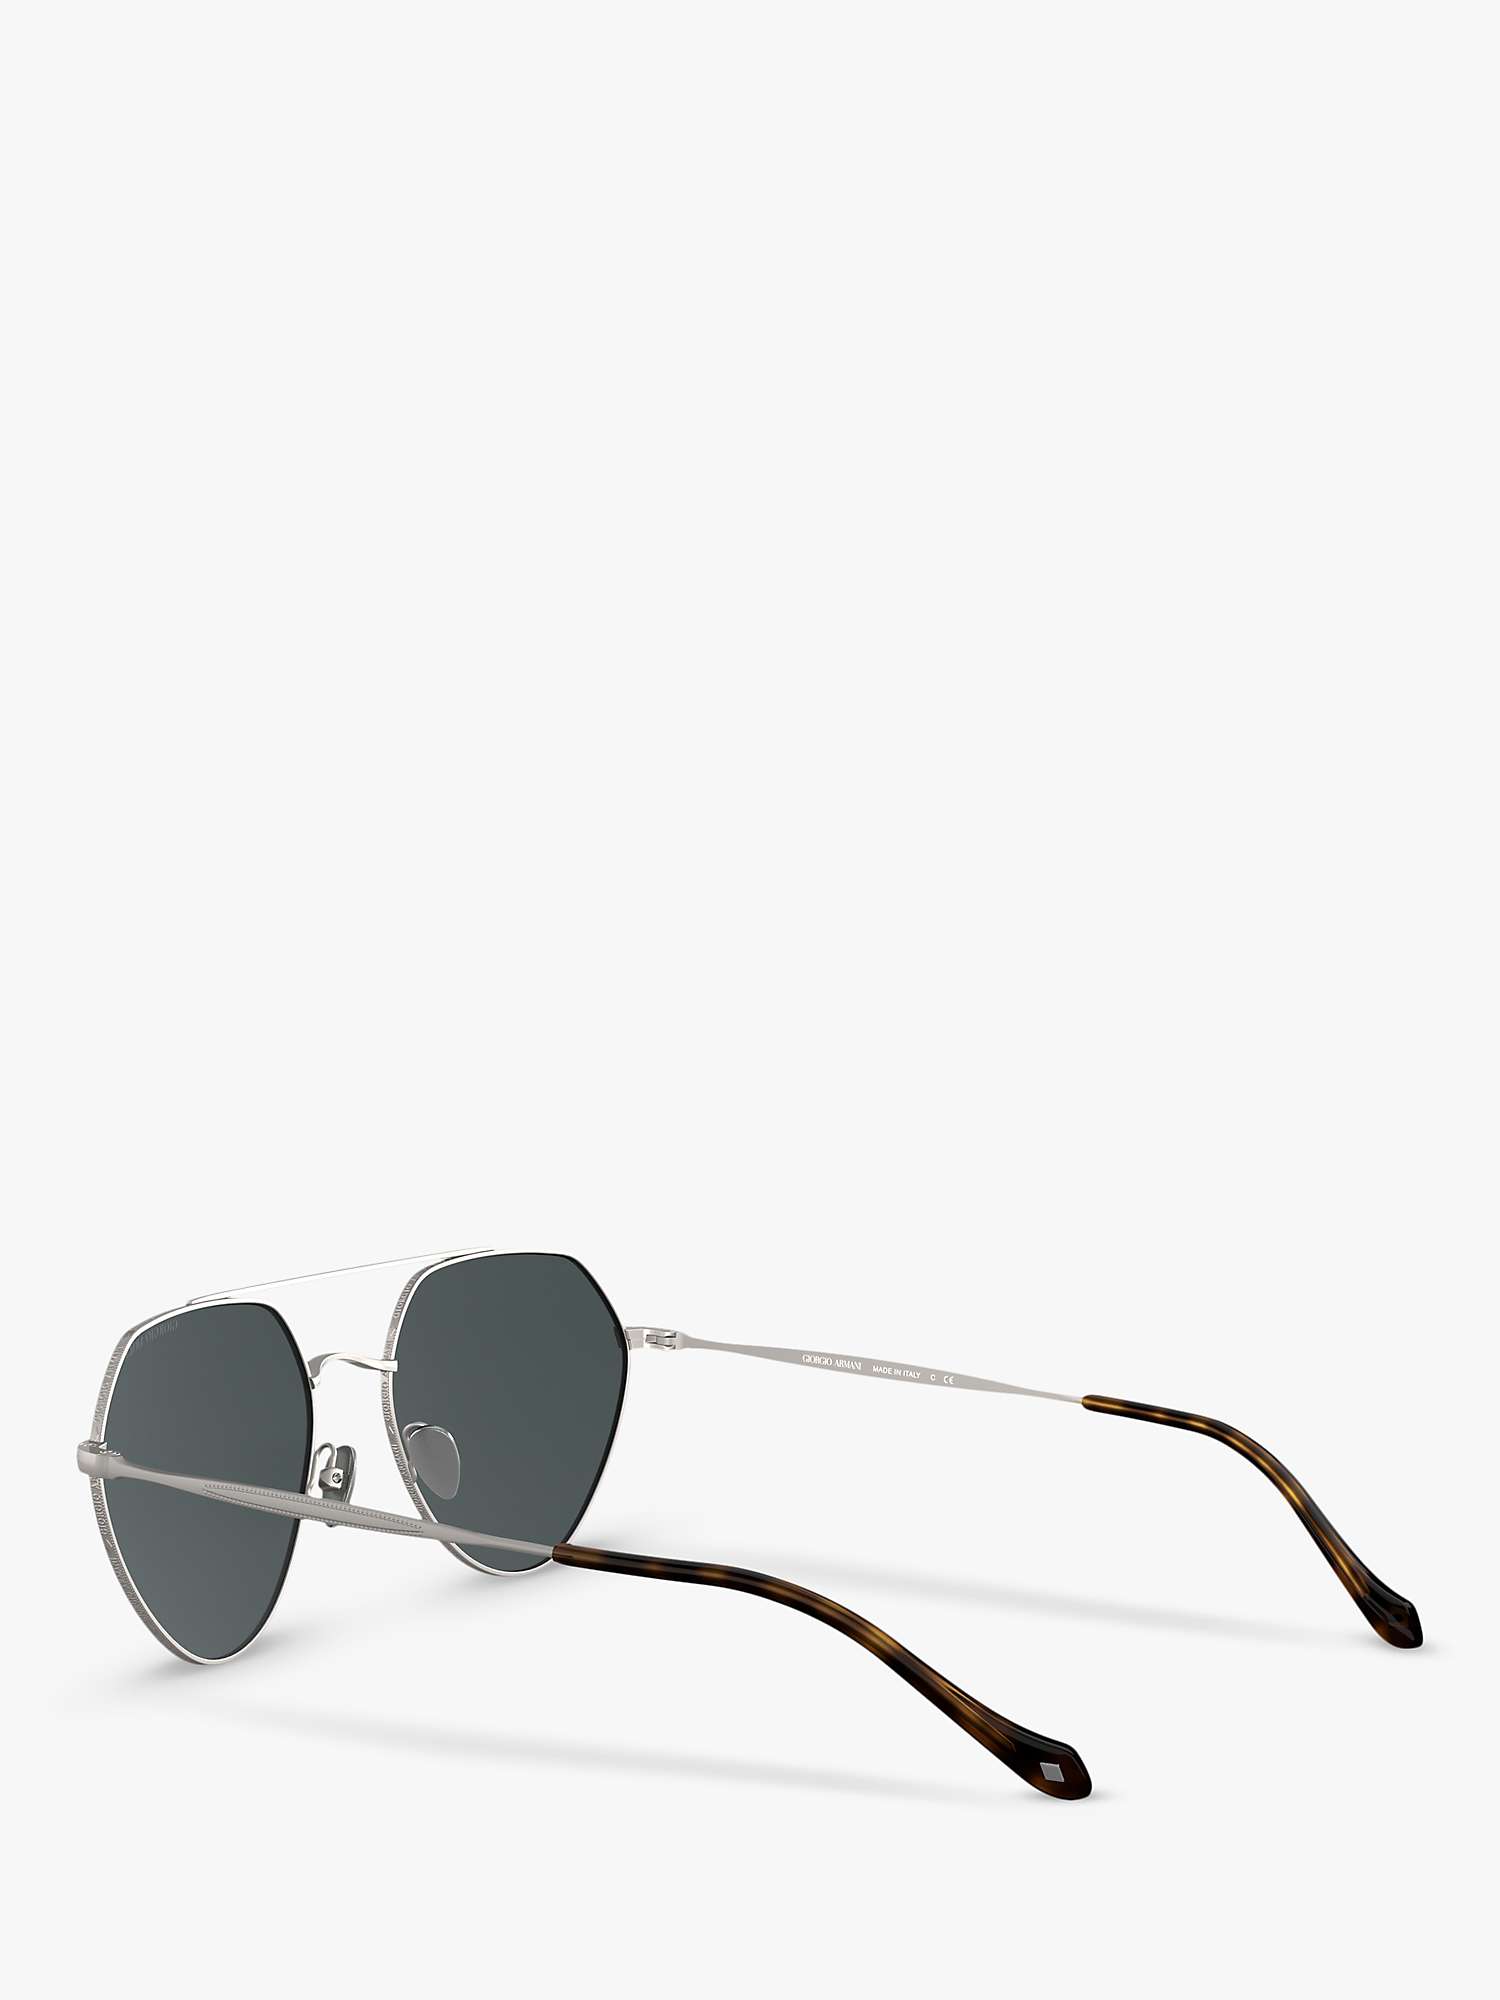 Buy Giorgio Armani AR6111 Women's Irregular Sunglasses, Matte Gunmetal/Grey Online at johnlewis.com